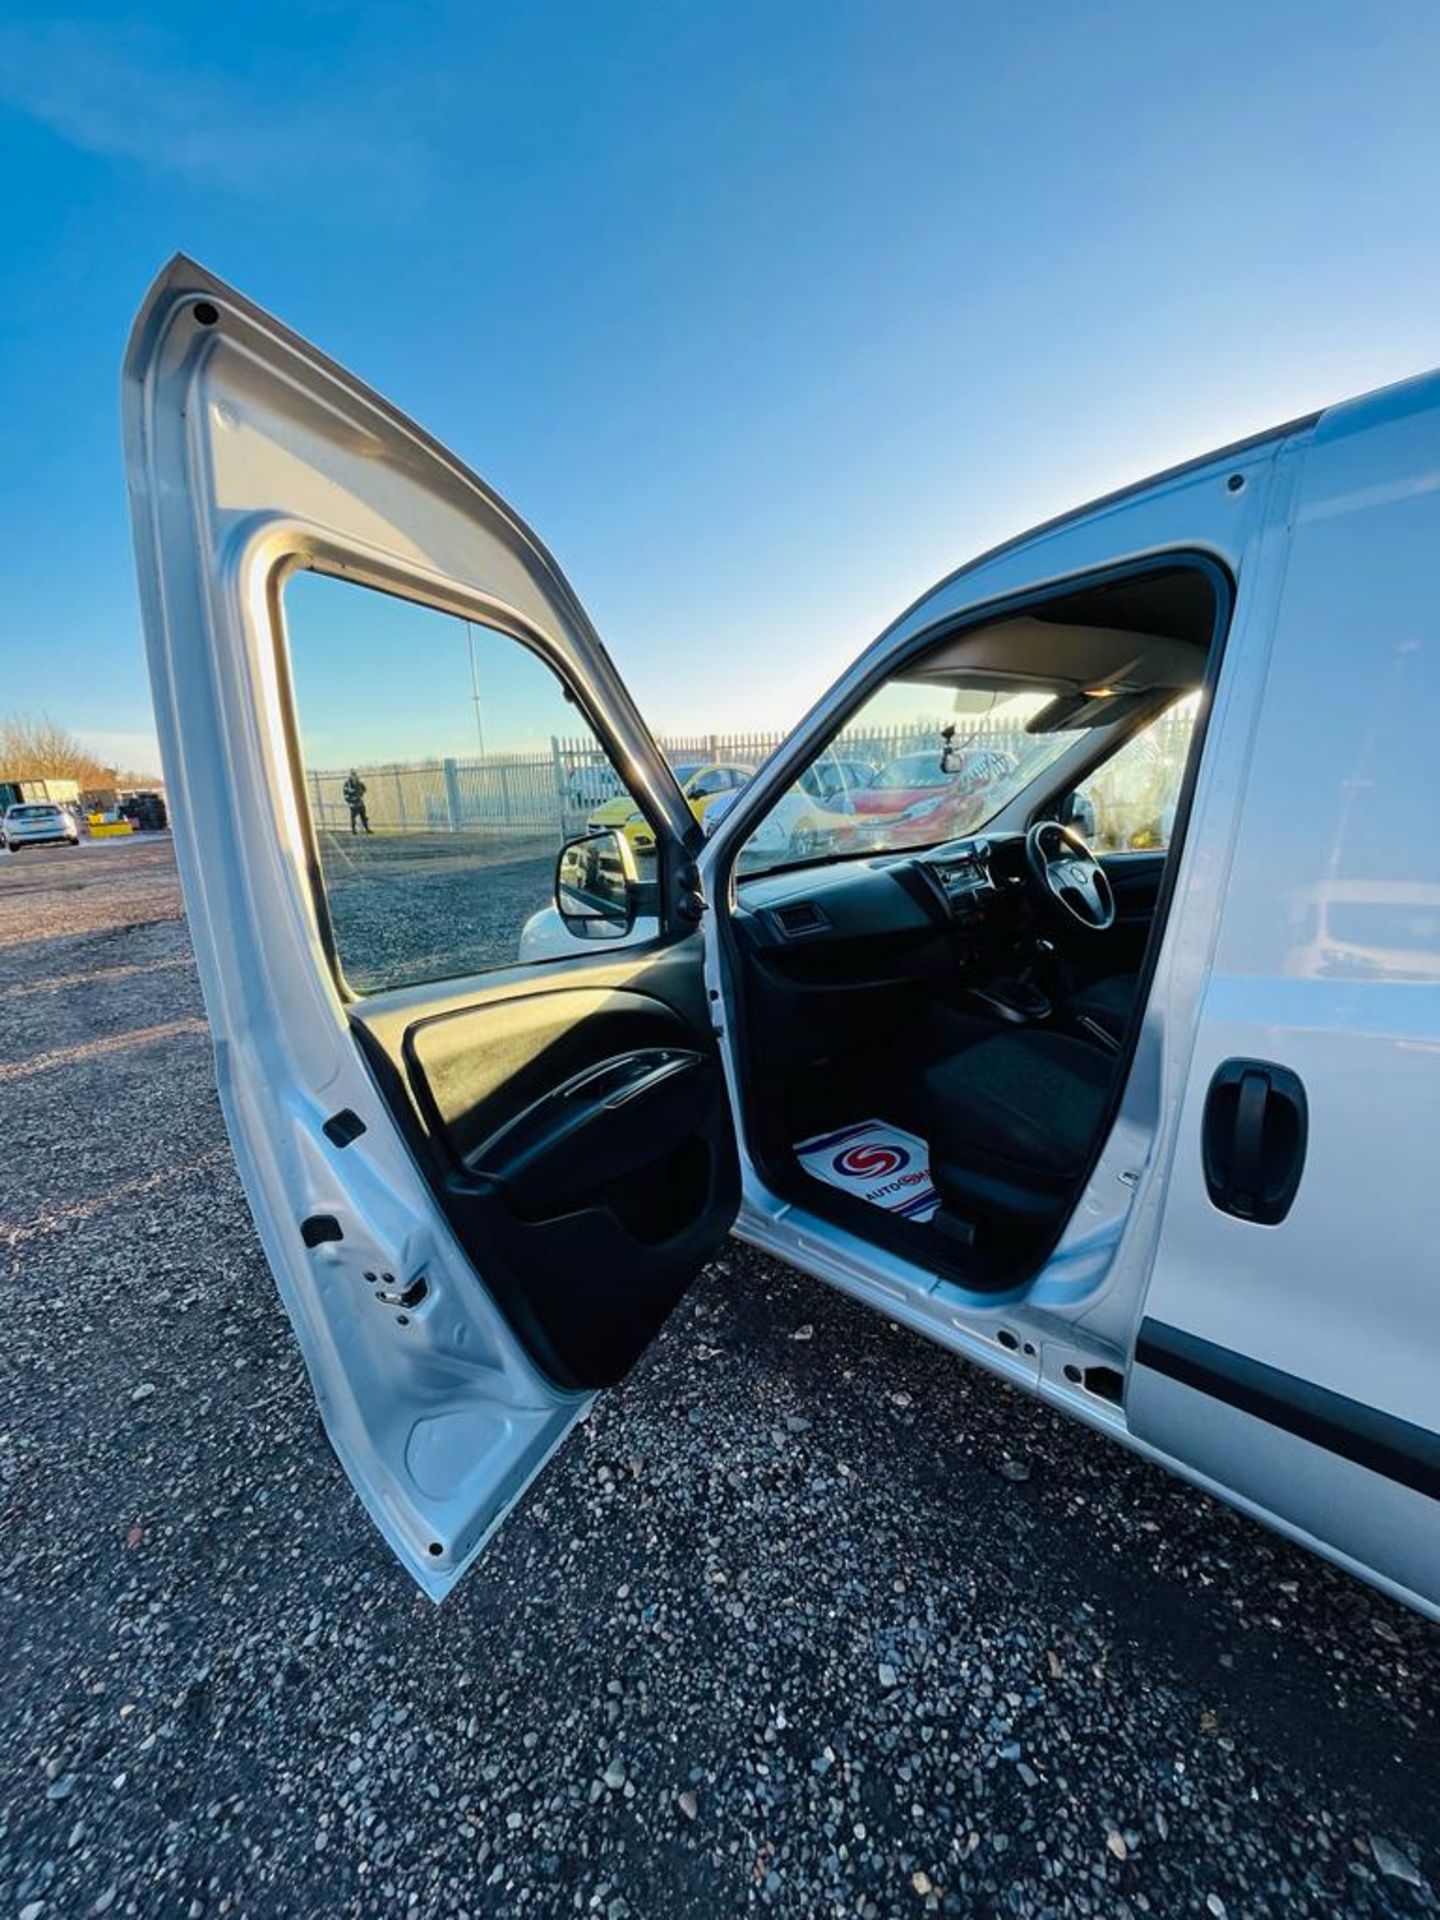 ** ON SALE ** Vauxhall Combo 1.3 CDTI 'Sportive' L1 H1 2015 '15 Reg' - Panel Van - No Vat - Image 20 of 23